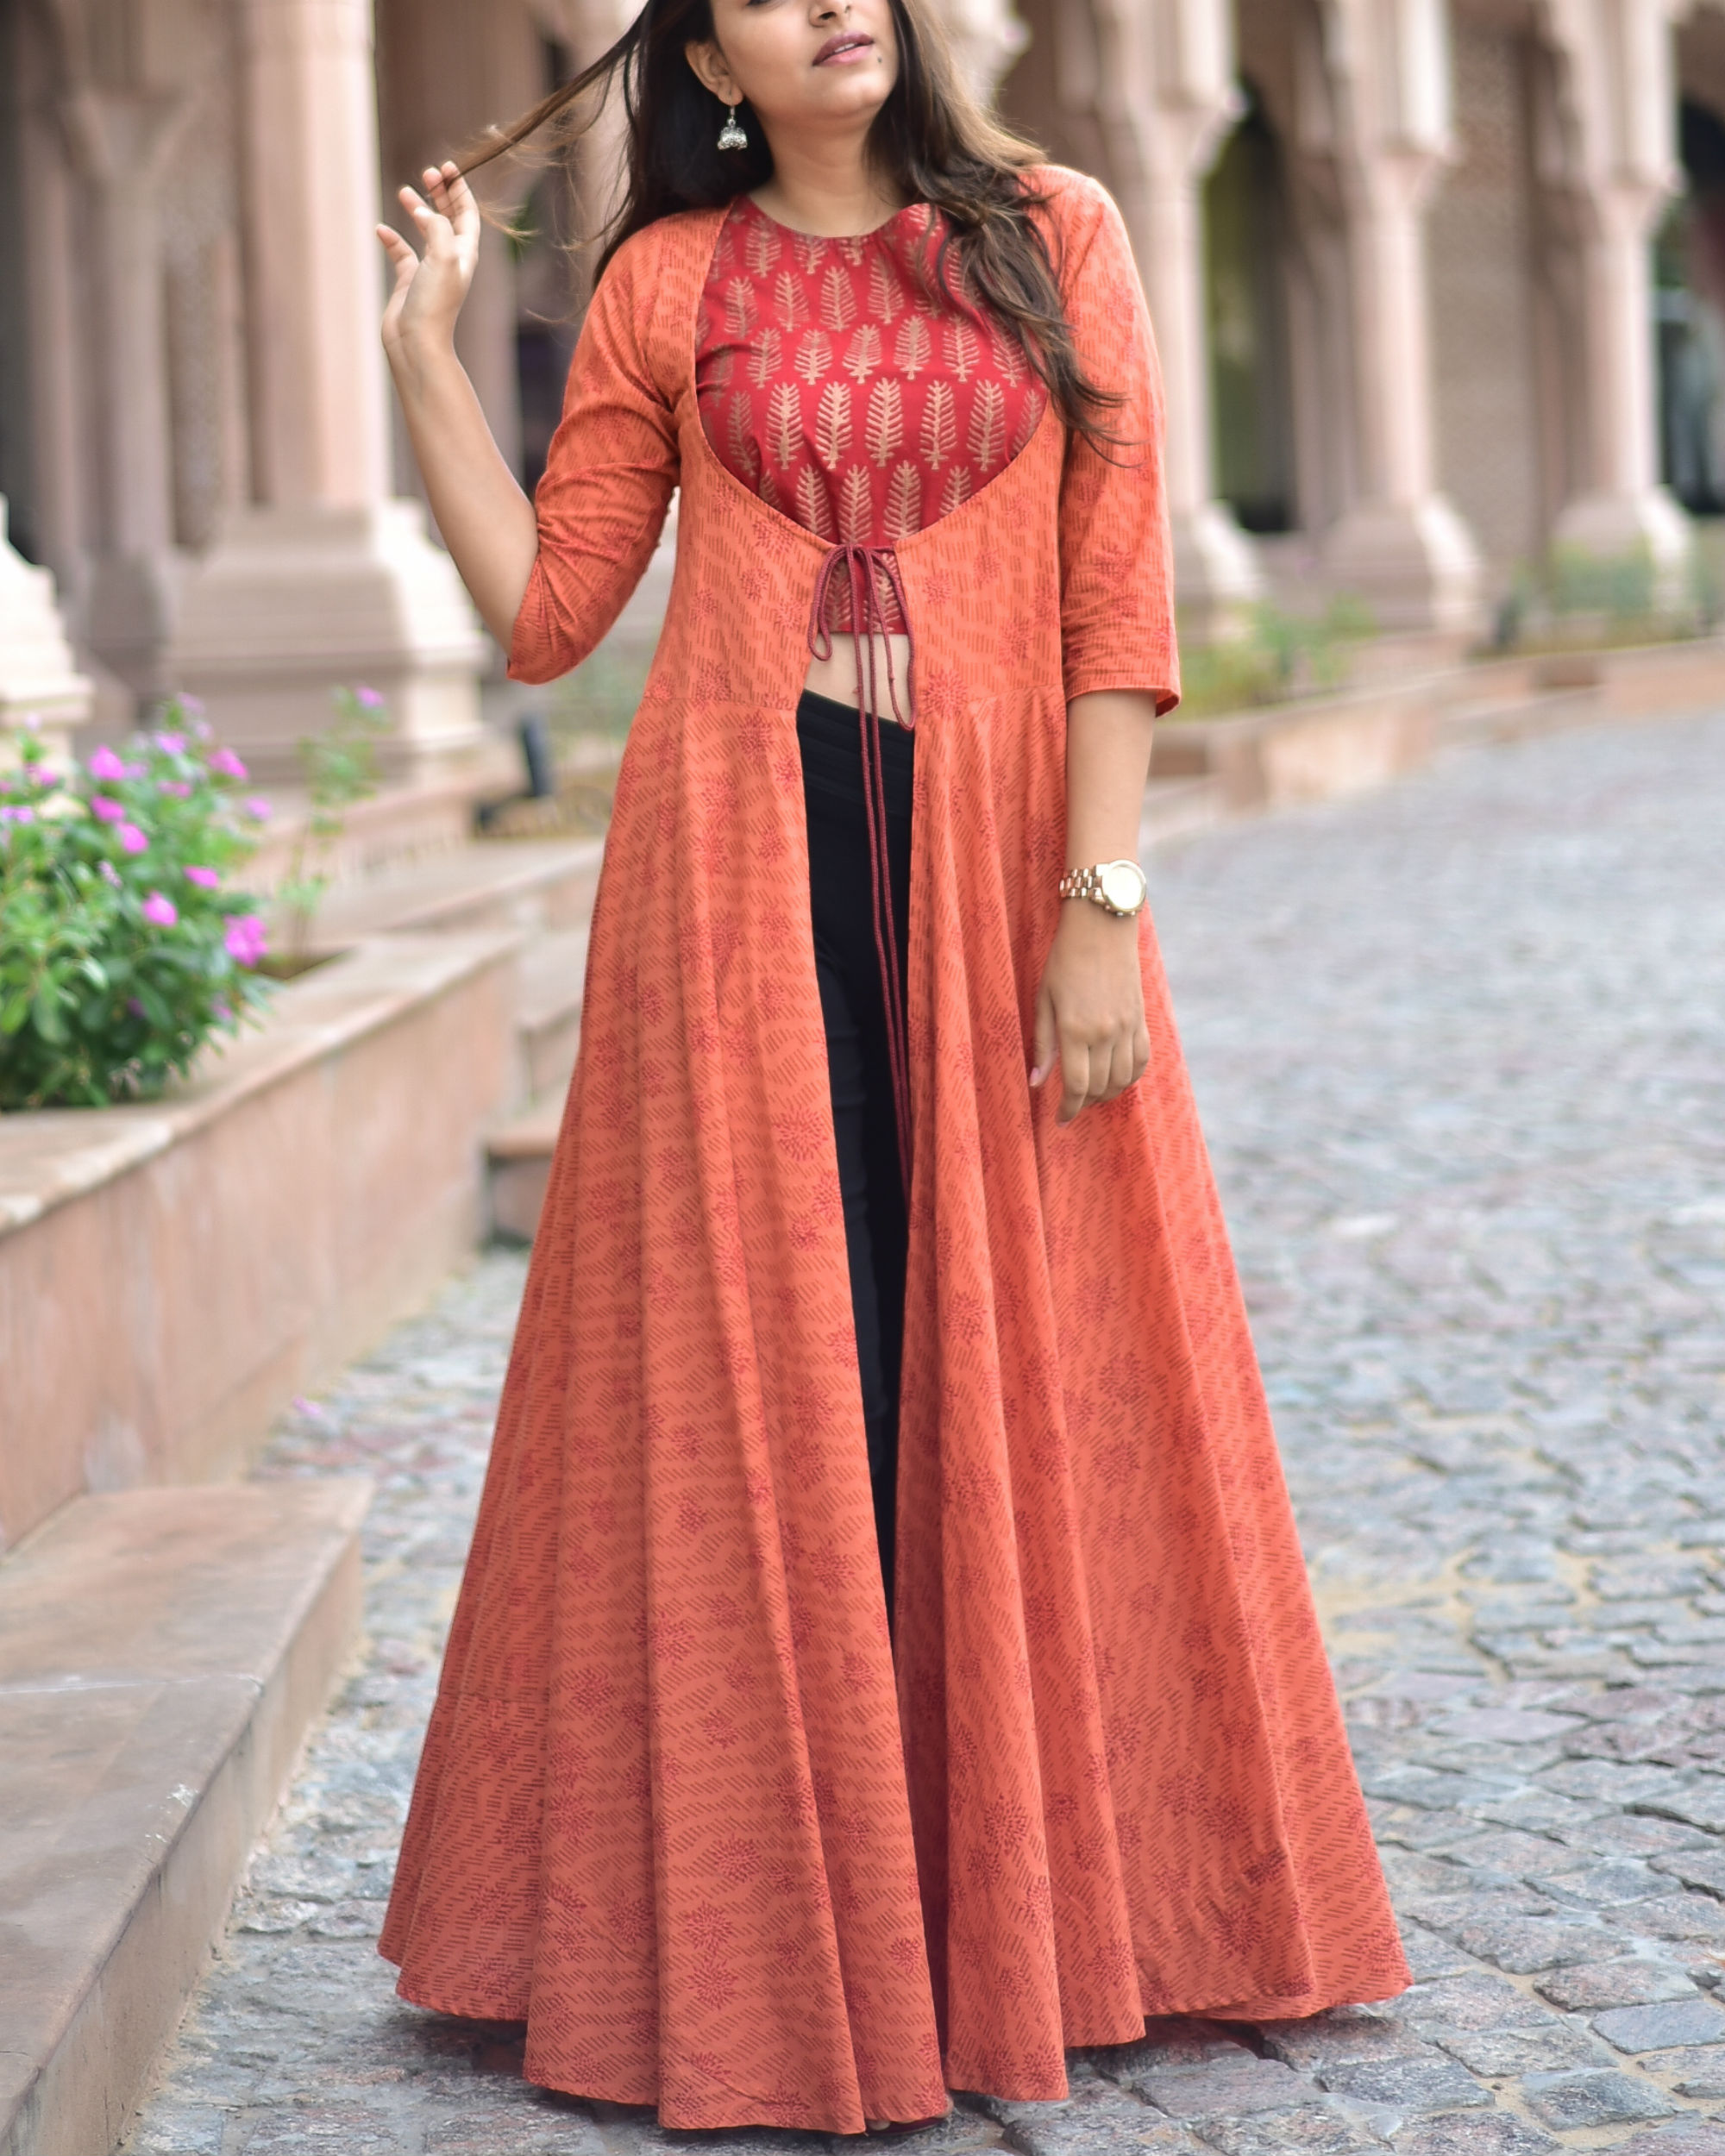 Kerala Traditional Dress | Long skirt top designs, Skirt and top dress,  Long skirt and top